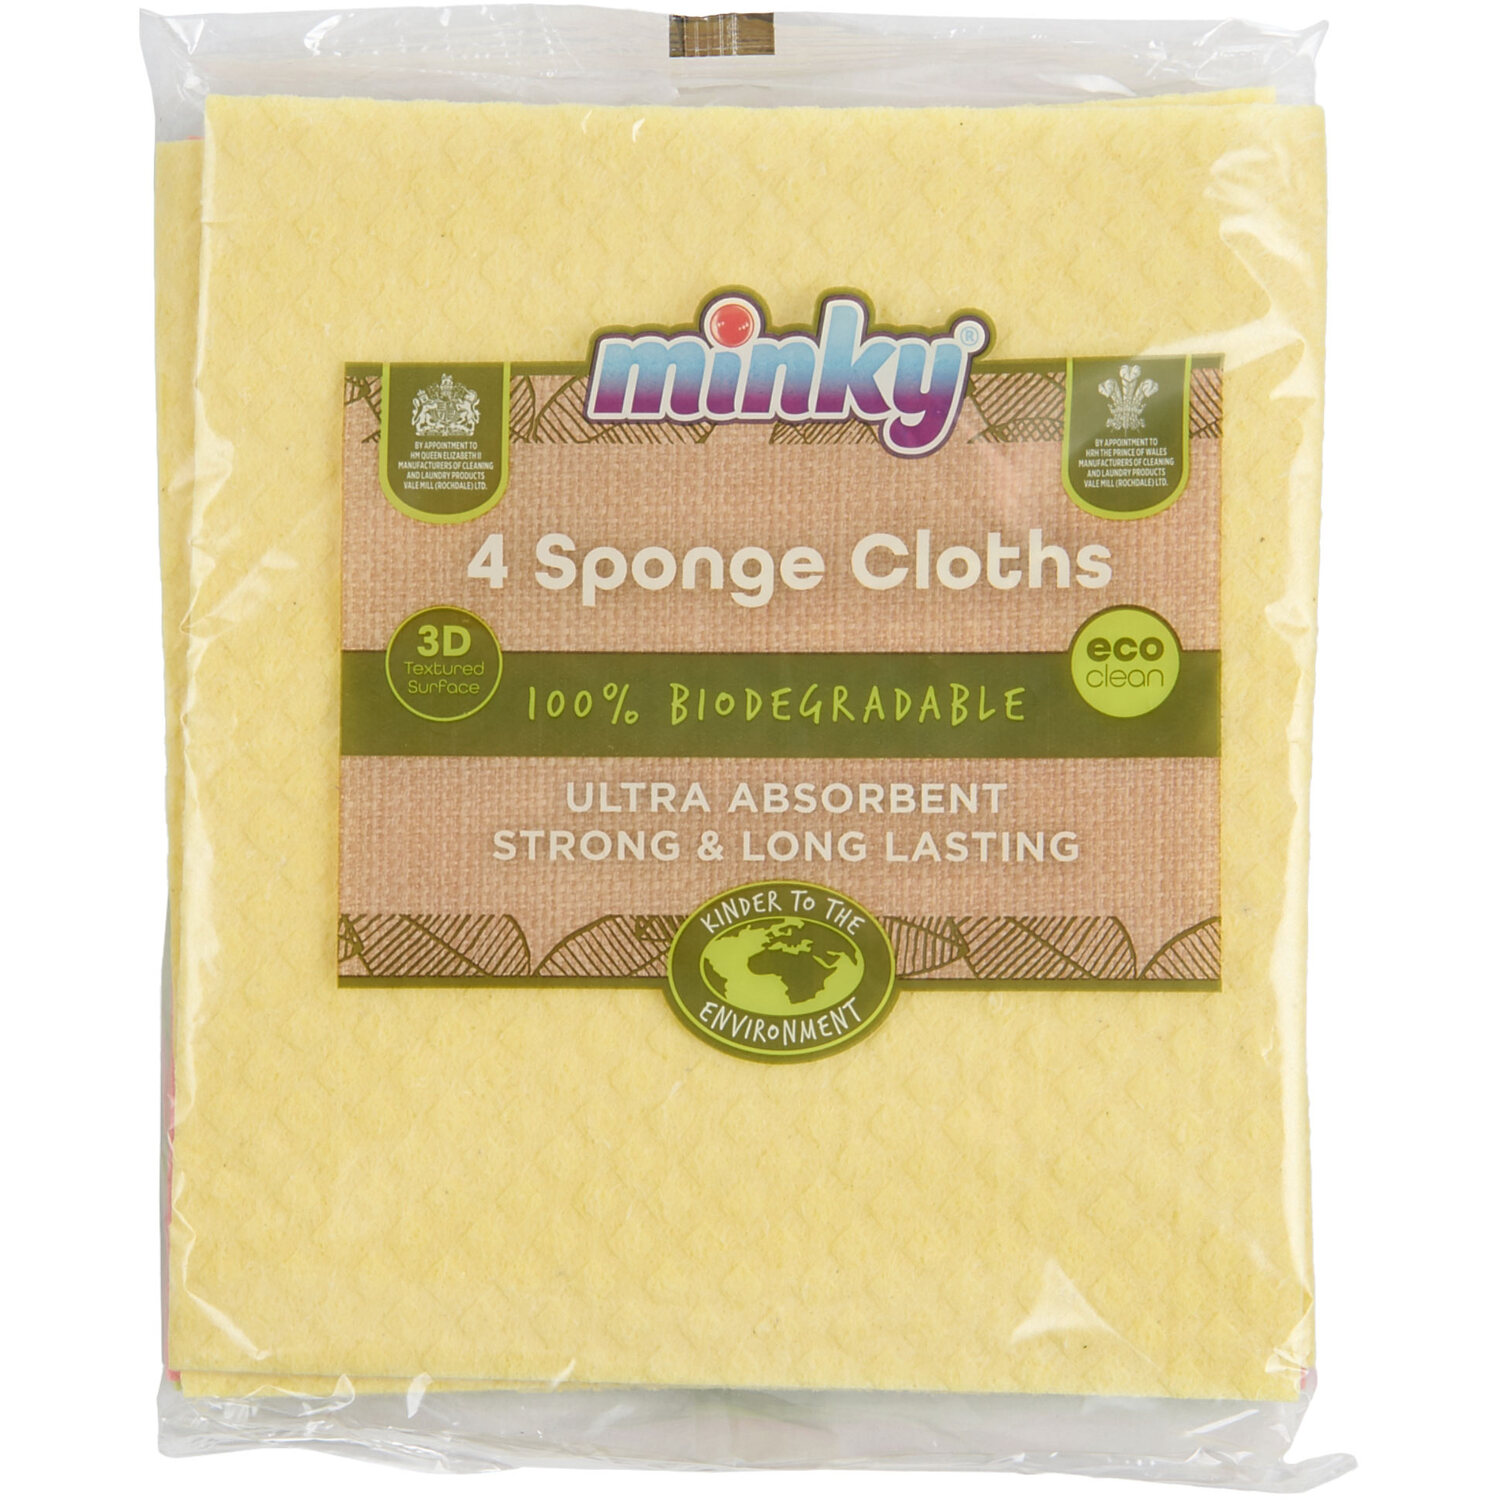 Minky Ultra Absorbent Sponge Cloths 4 Pack Image 1